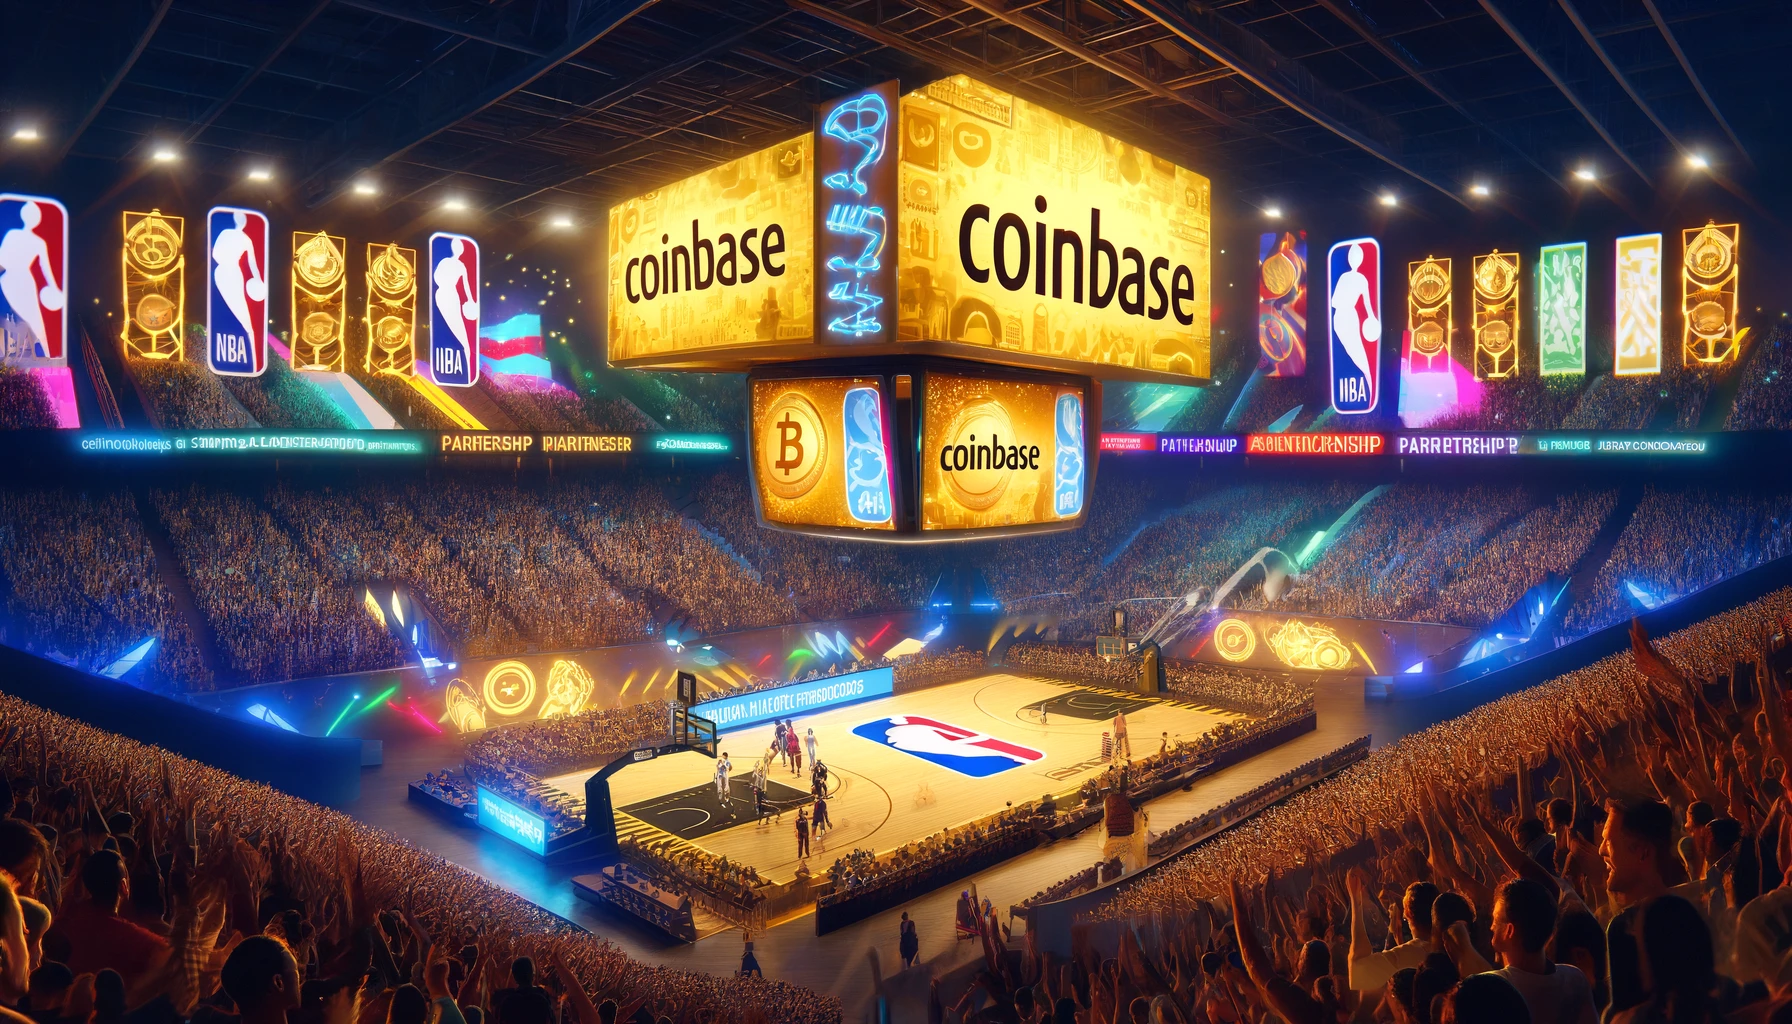 Coinbase lanceert mega advertentiecampagne tijdens NBA-play-offs